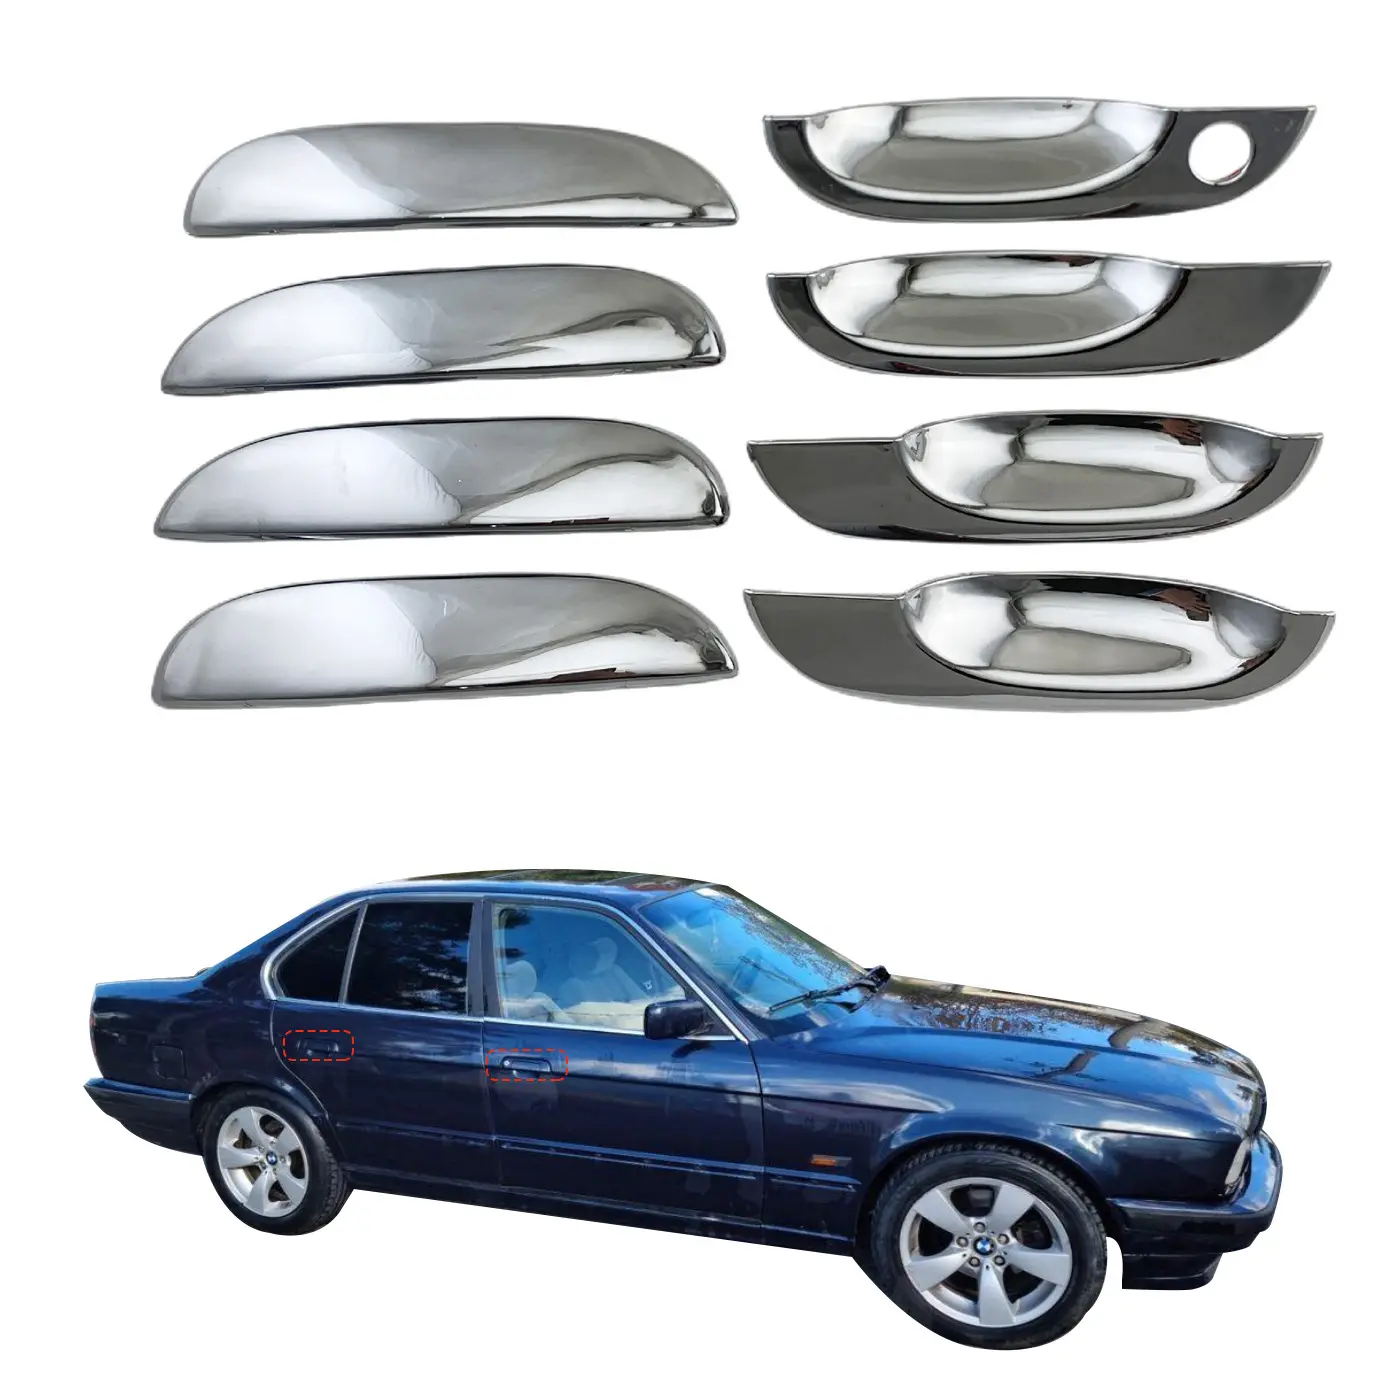 Hot Sale Car Accessories Exterior Decoration ABS Chrome Handle Cover For BMW E38 1995-2004